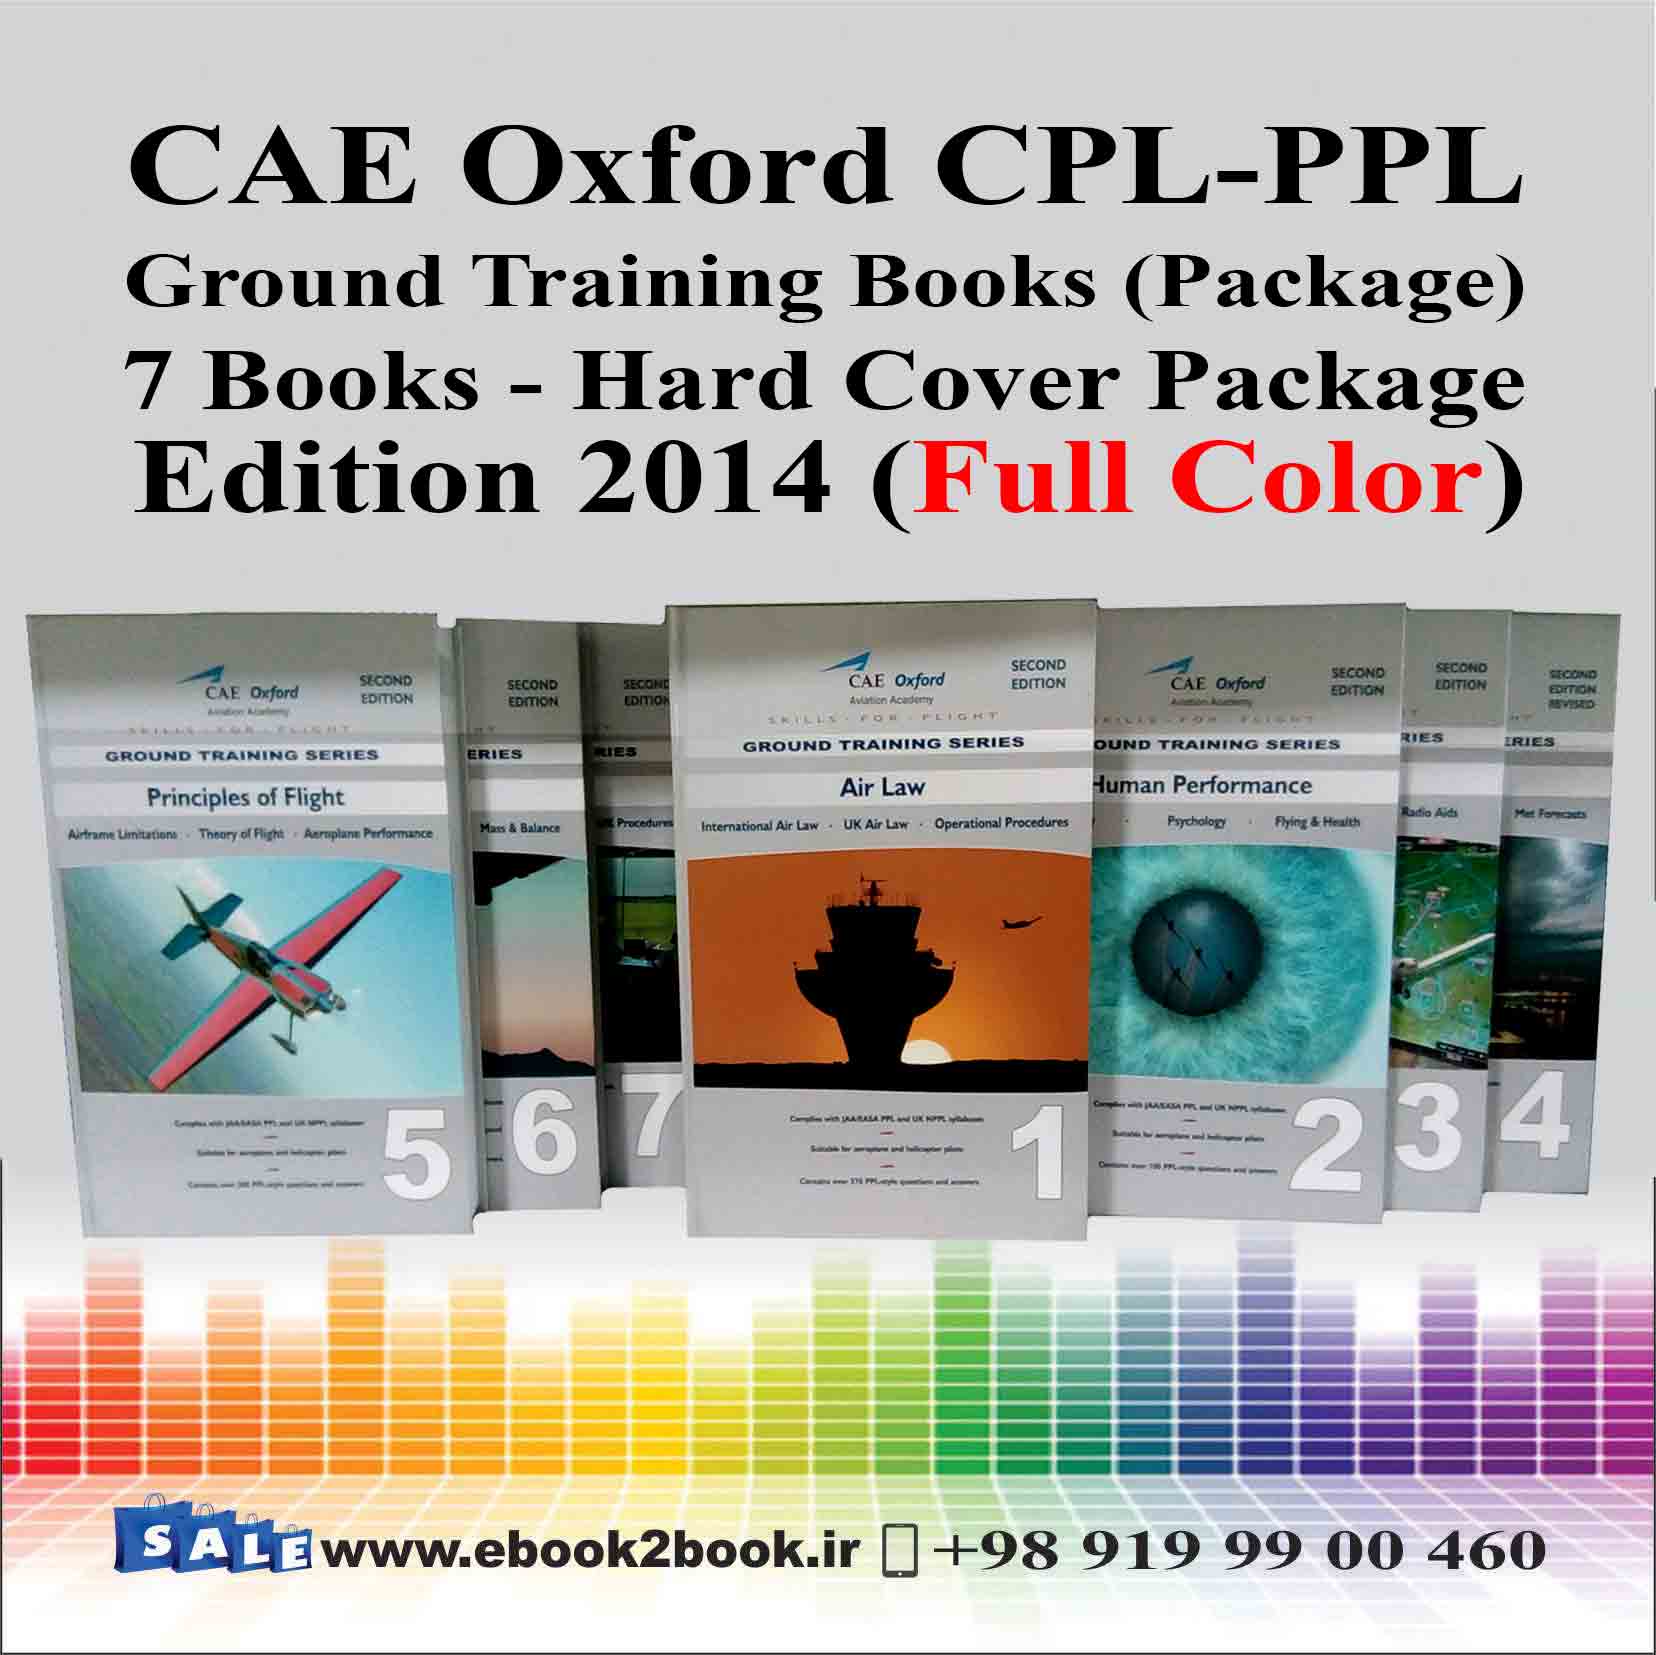  کتاب PPL-CPL خلبانی آکسفورد  2014 - چاپ تمام رنگی